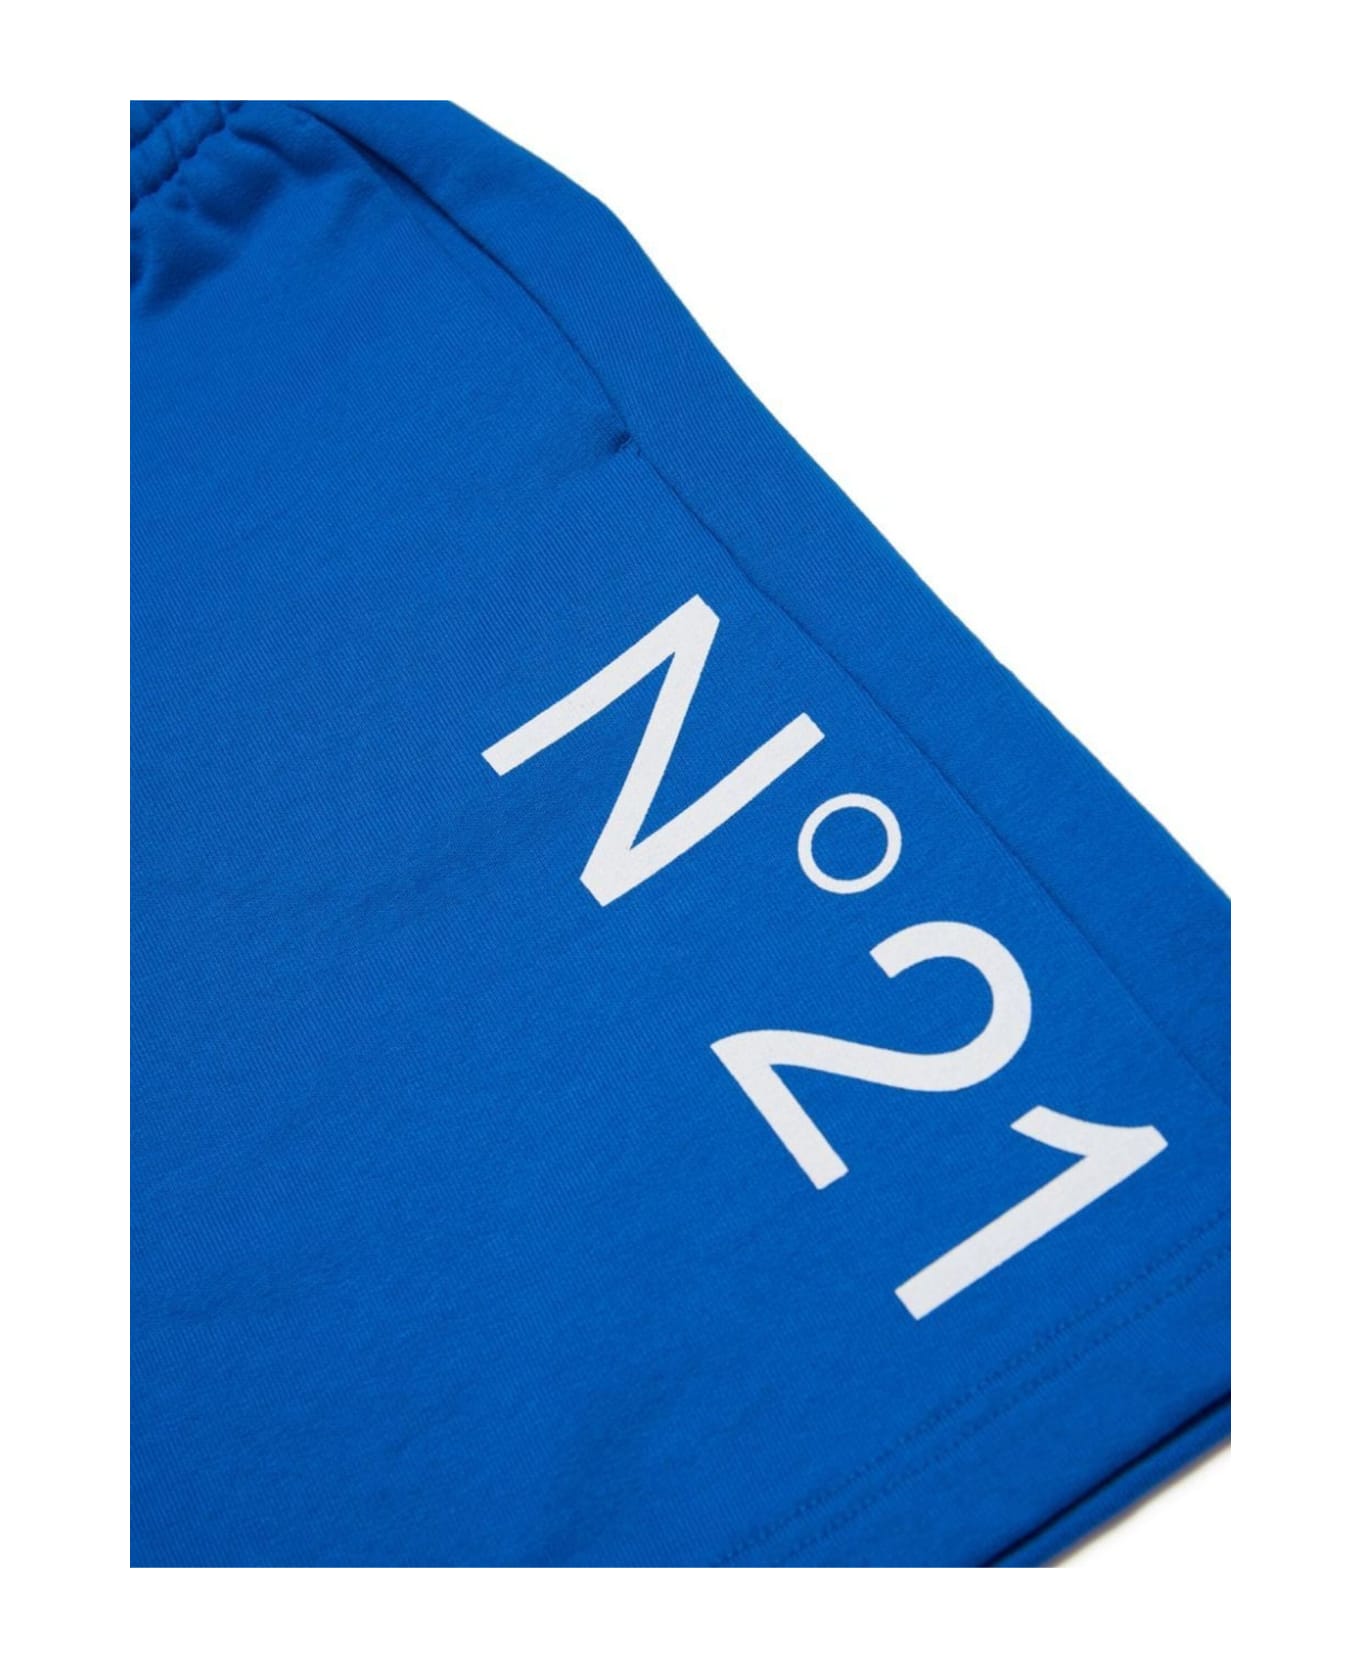 N.21 N°21 Shorts Blue - Blue